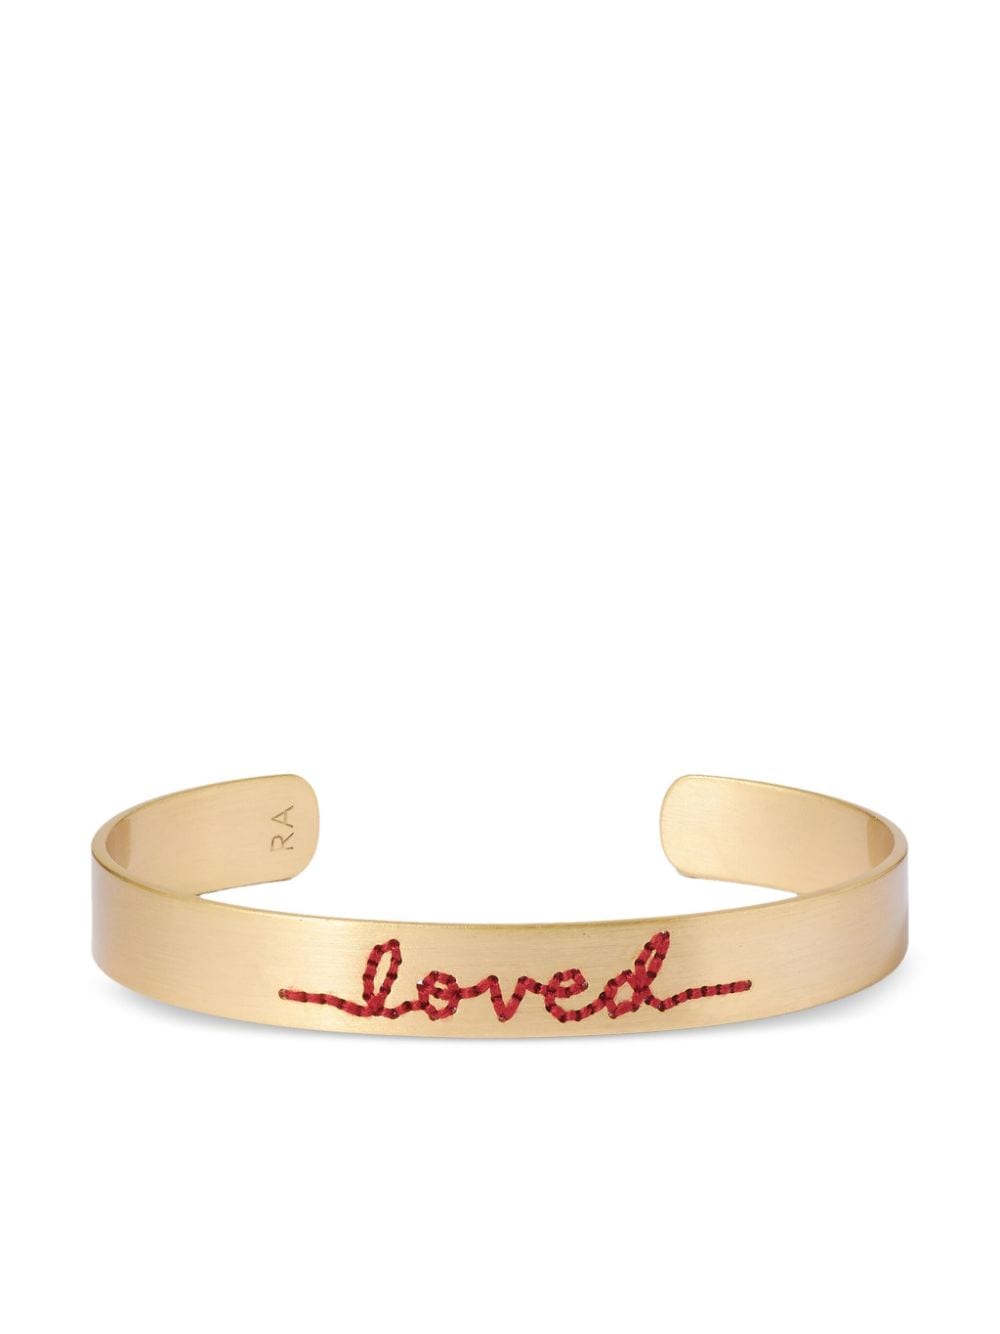 Roxanne Assoulin Loved Stitched Cuff Bracelet - Farfetch